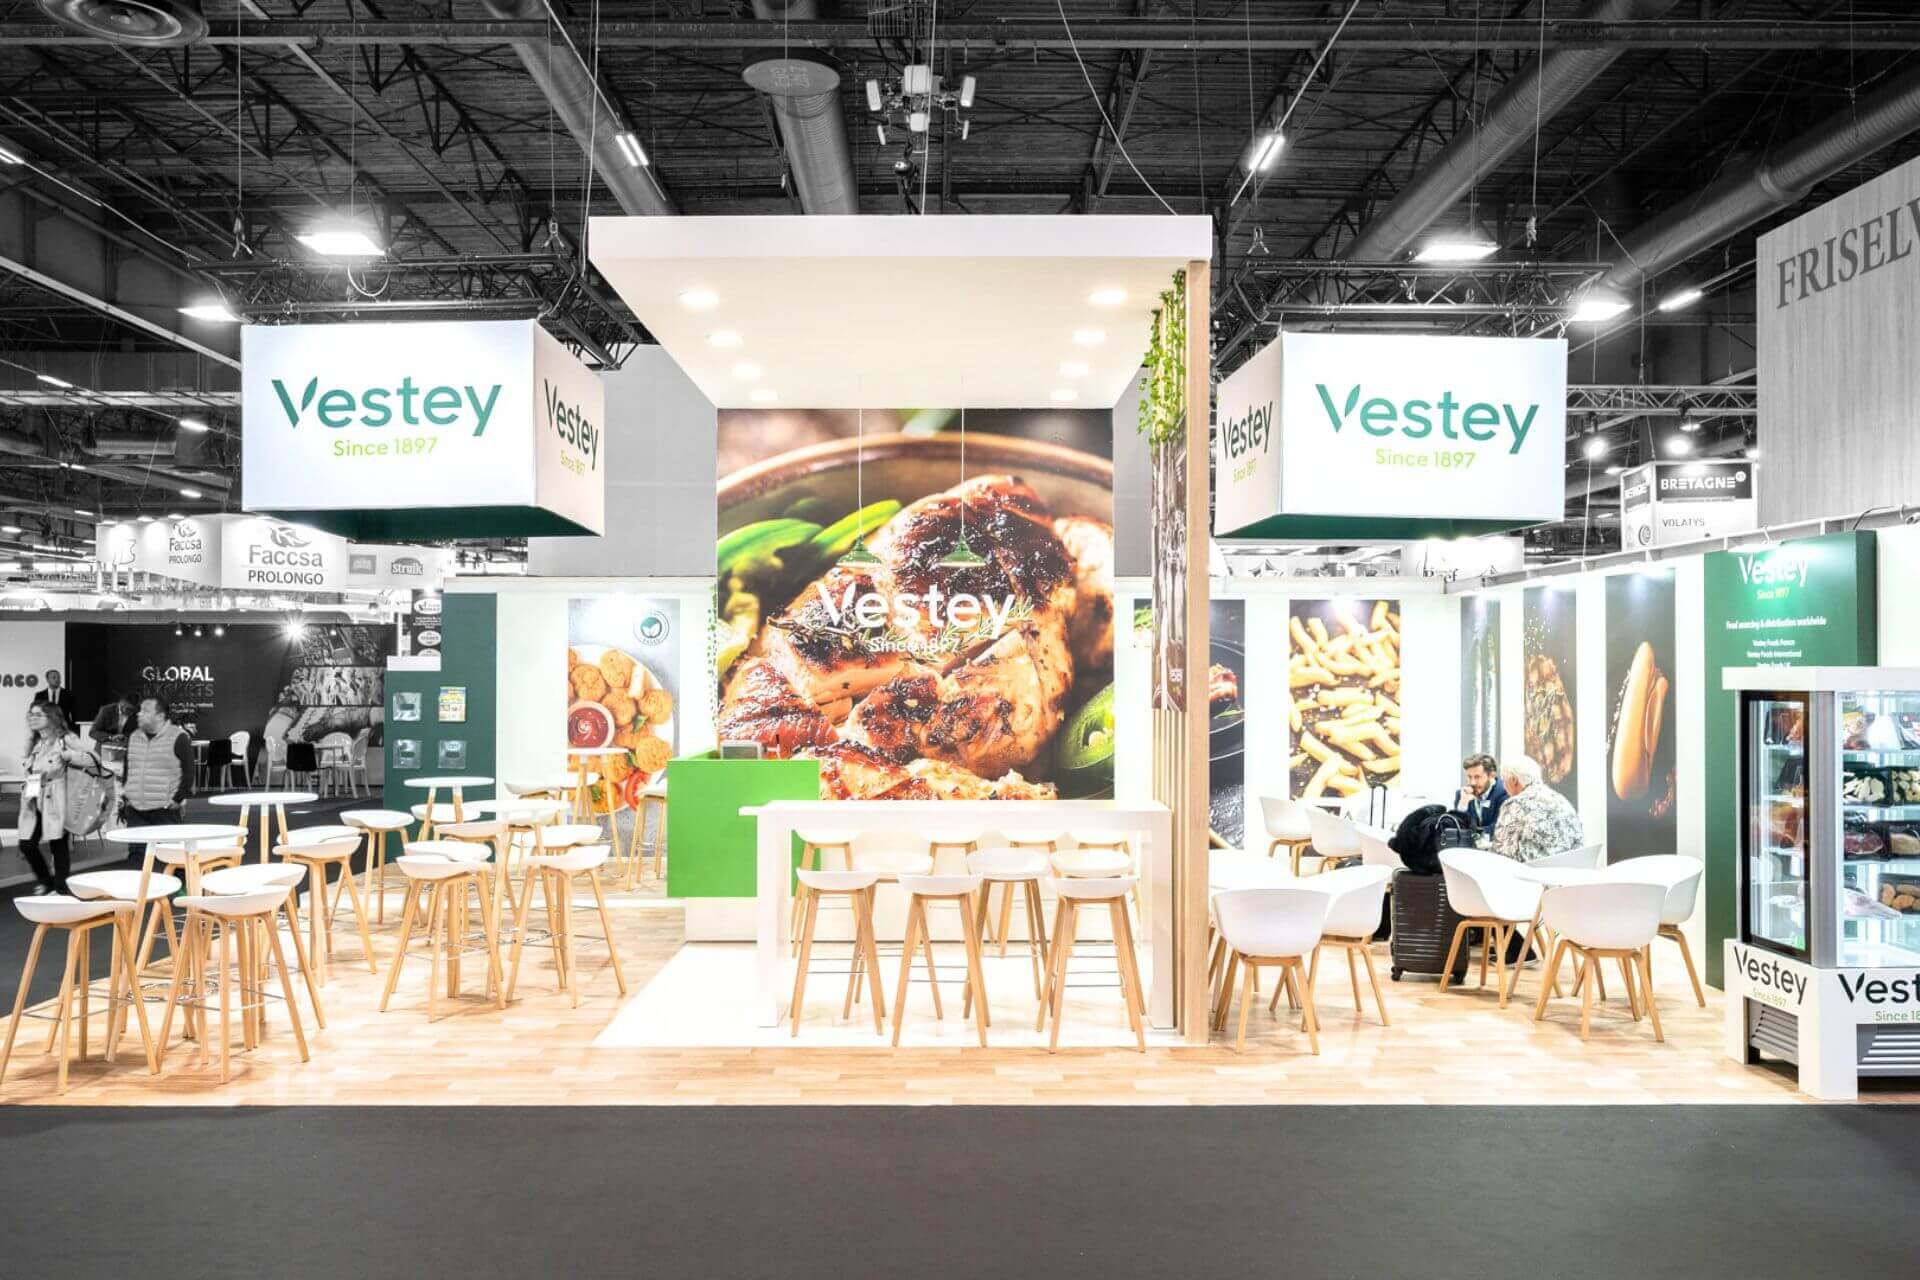 Vestey Foods